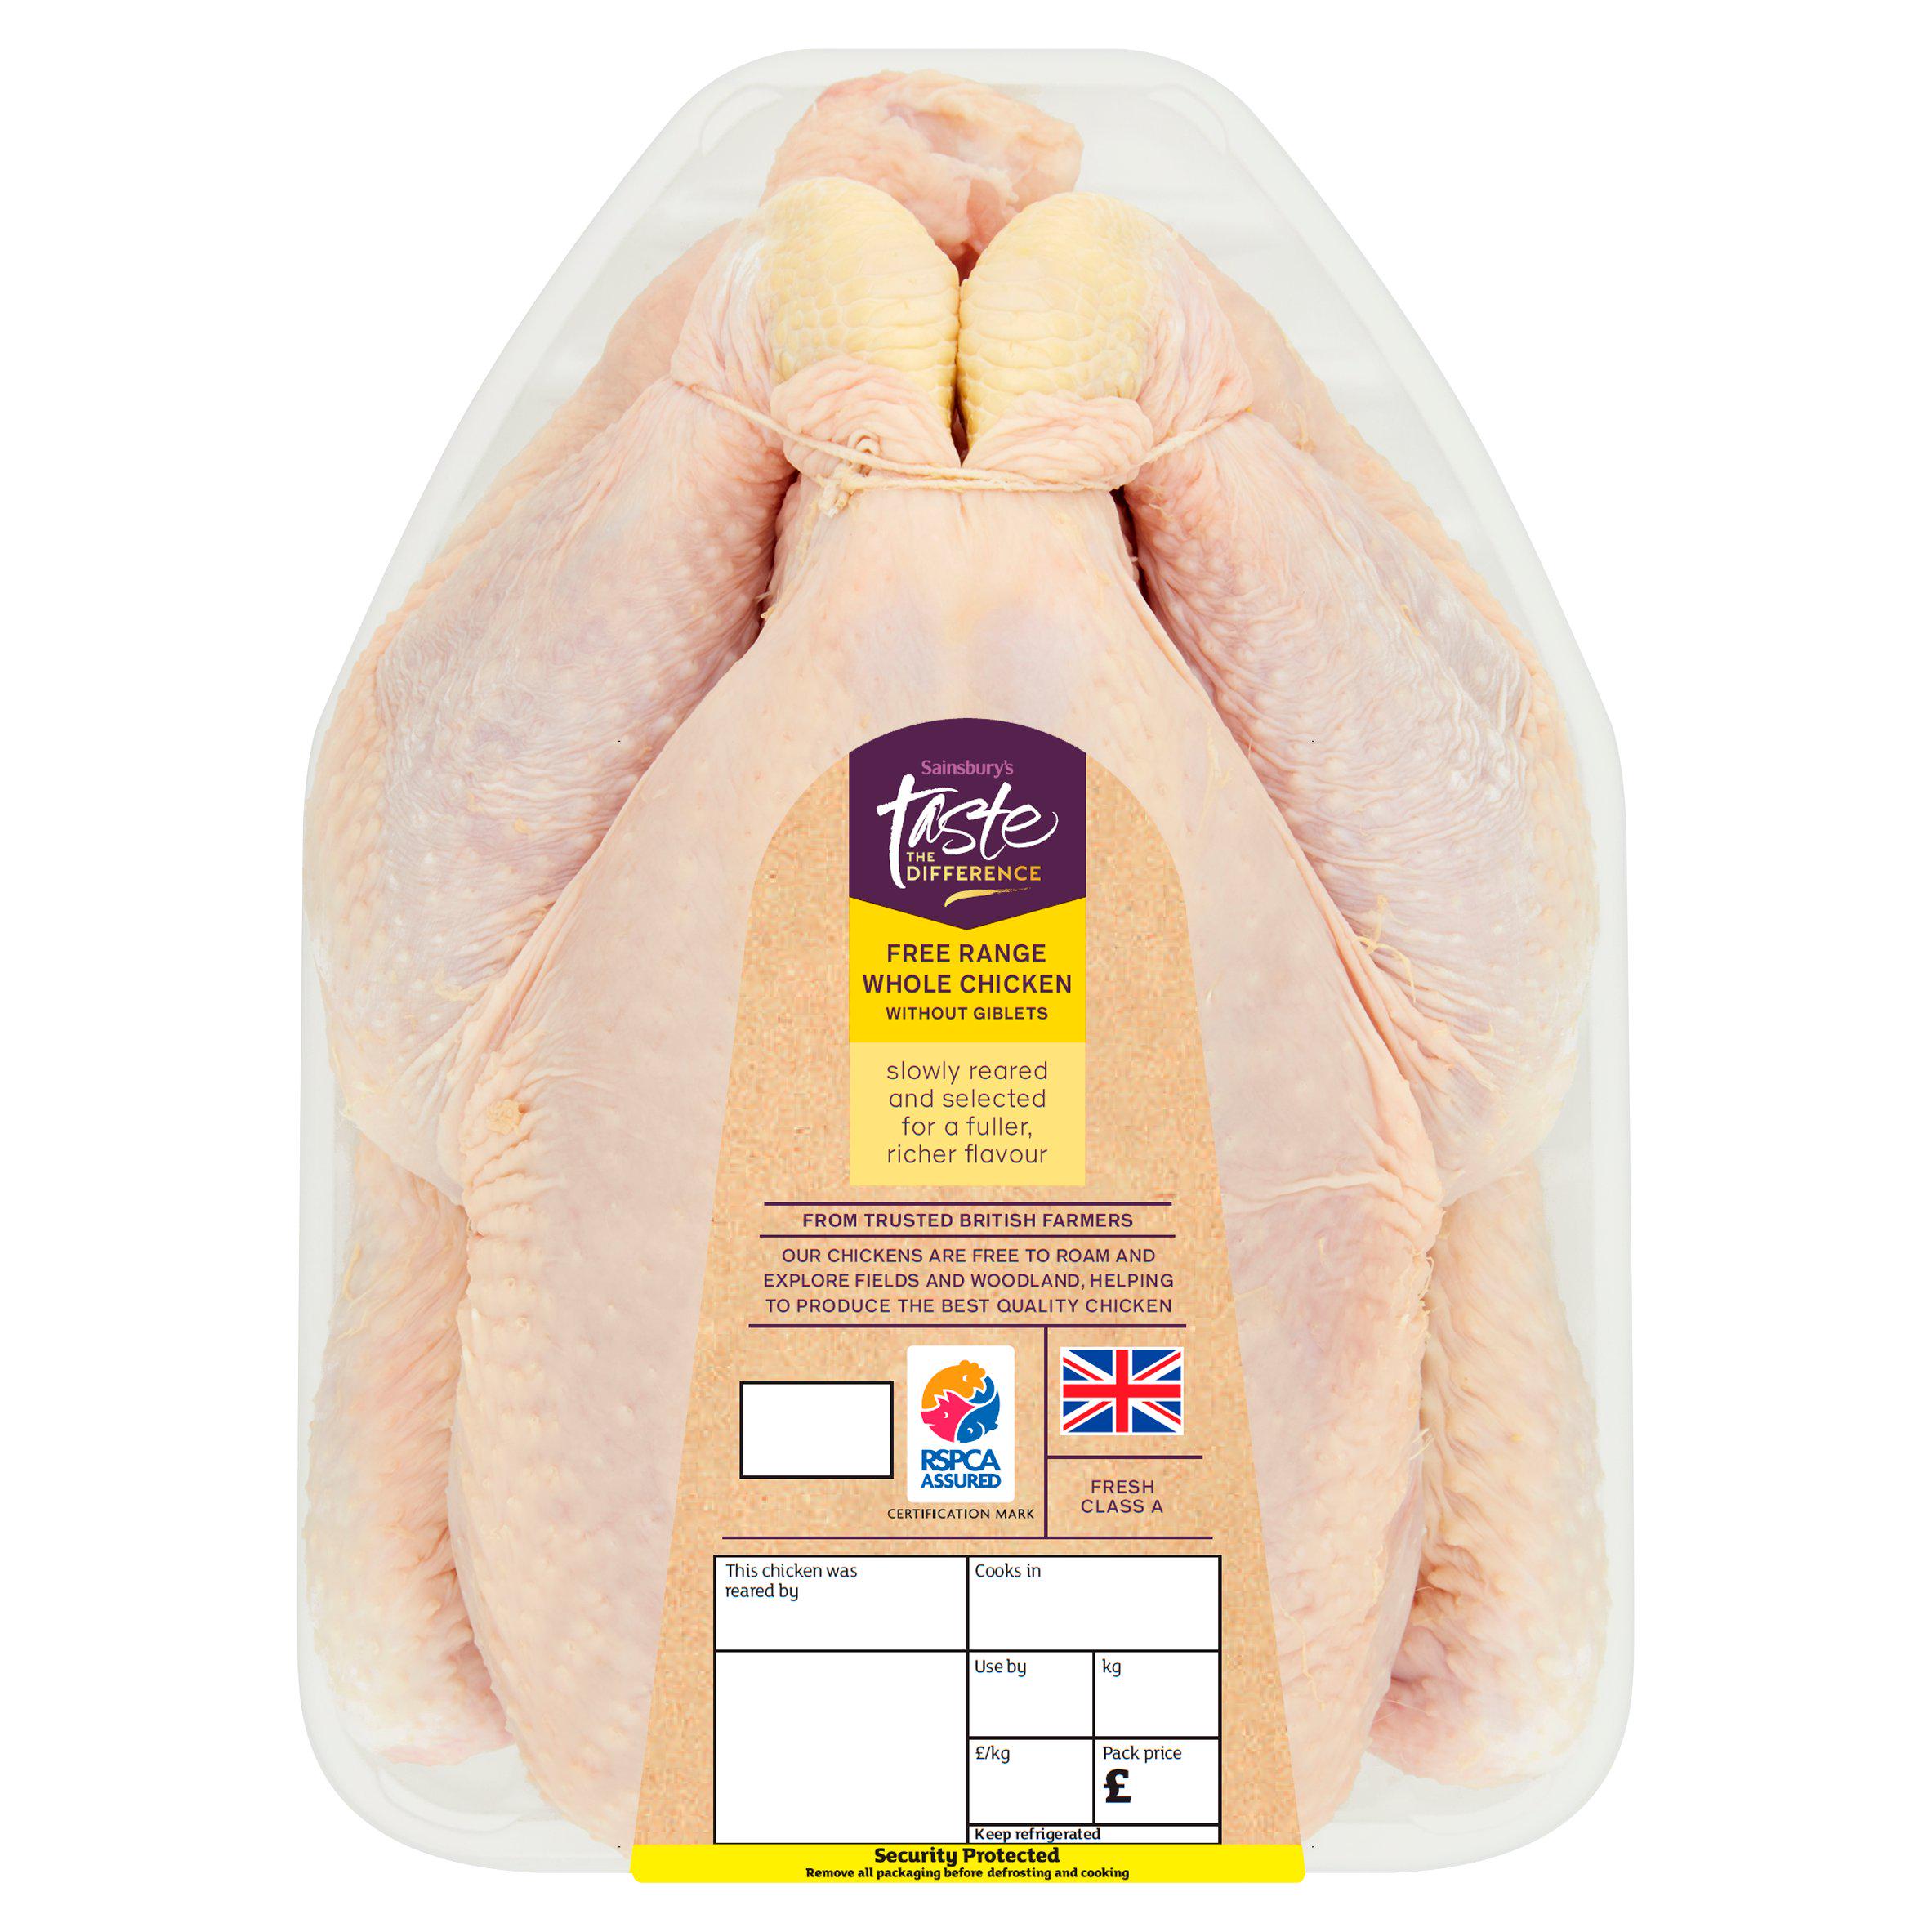 Sainsbury's Free Range British Whole Chicken, Taste the Difference